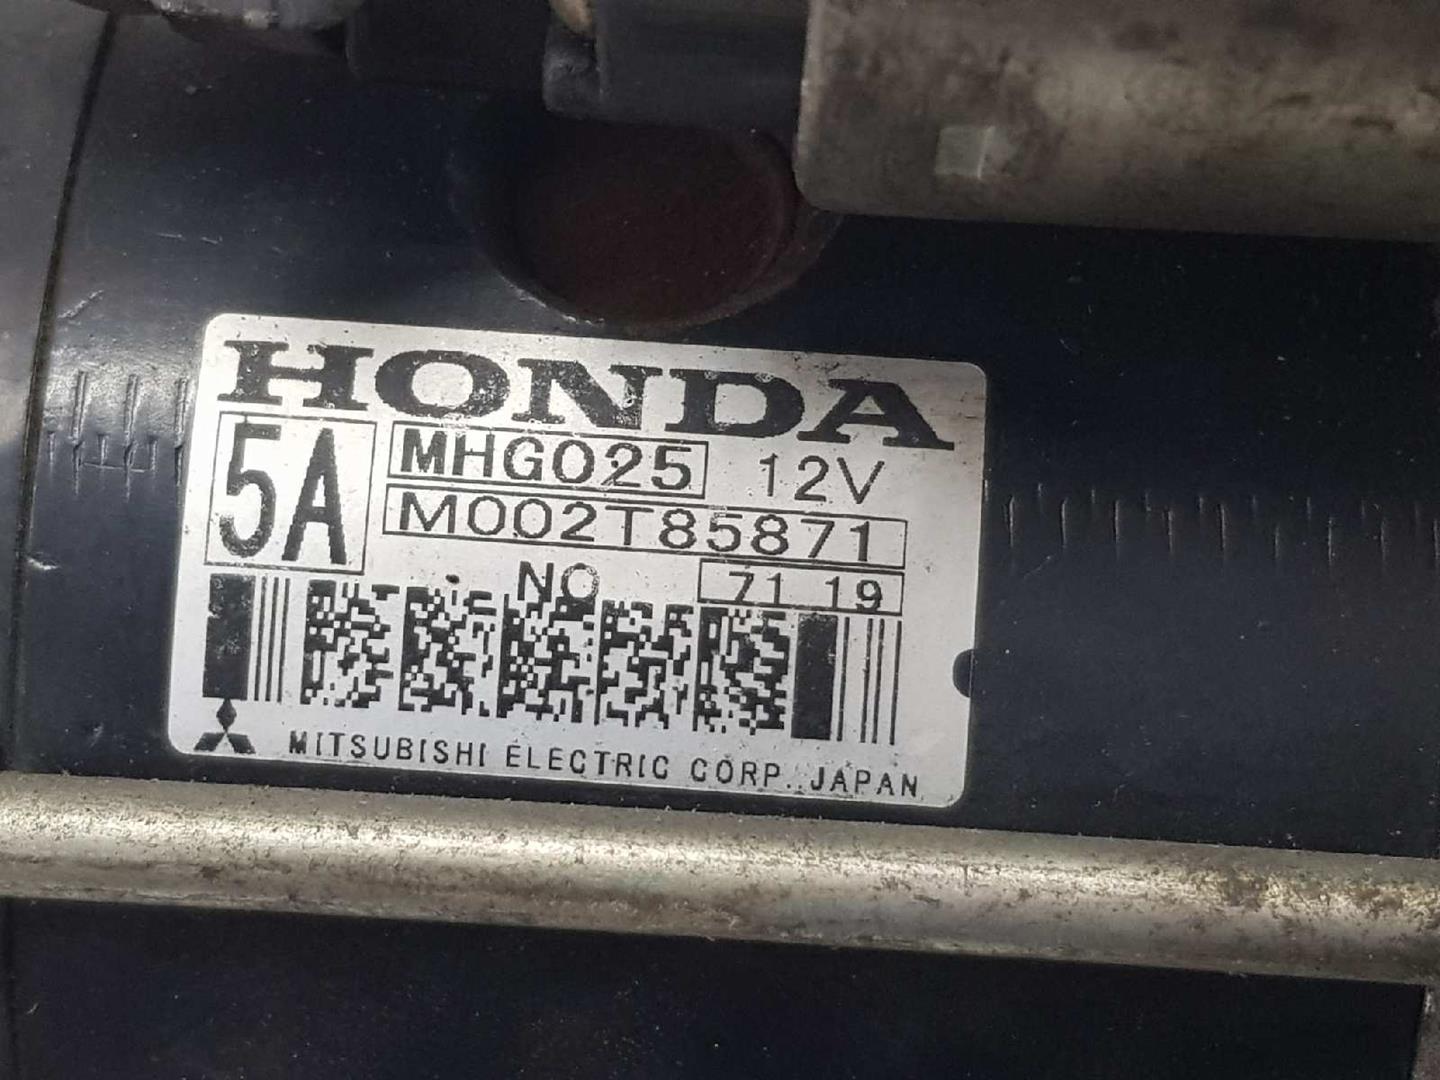 HONDA Civic 8 generation (2005-2012) Startmotor MHG025, 31200RSRE01, M002T85871 24143375